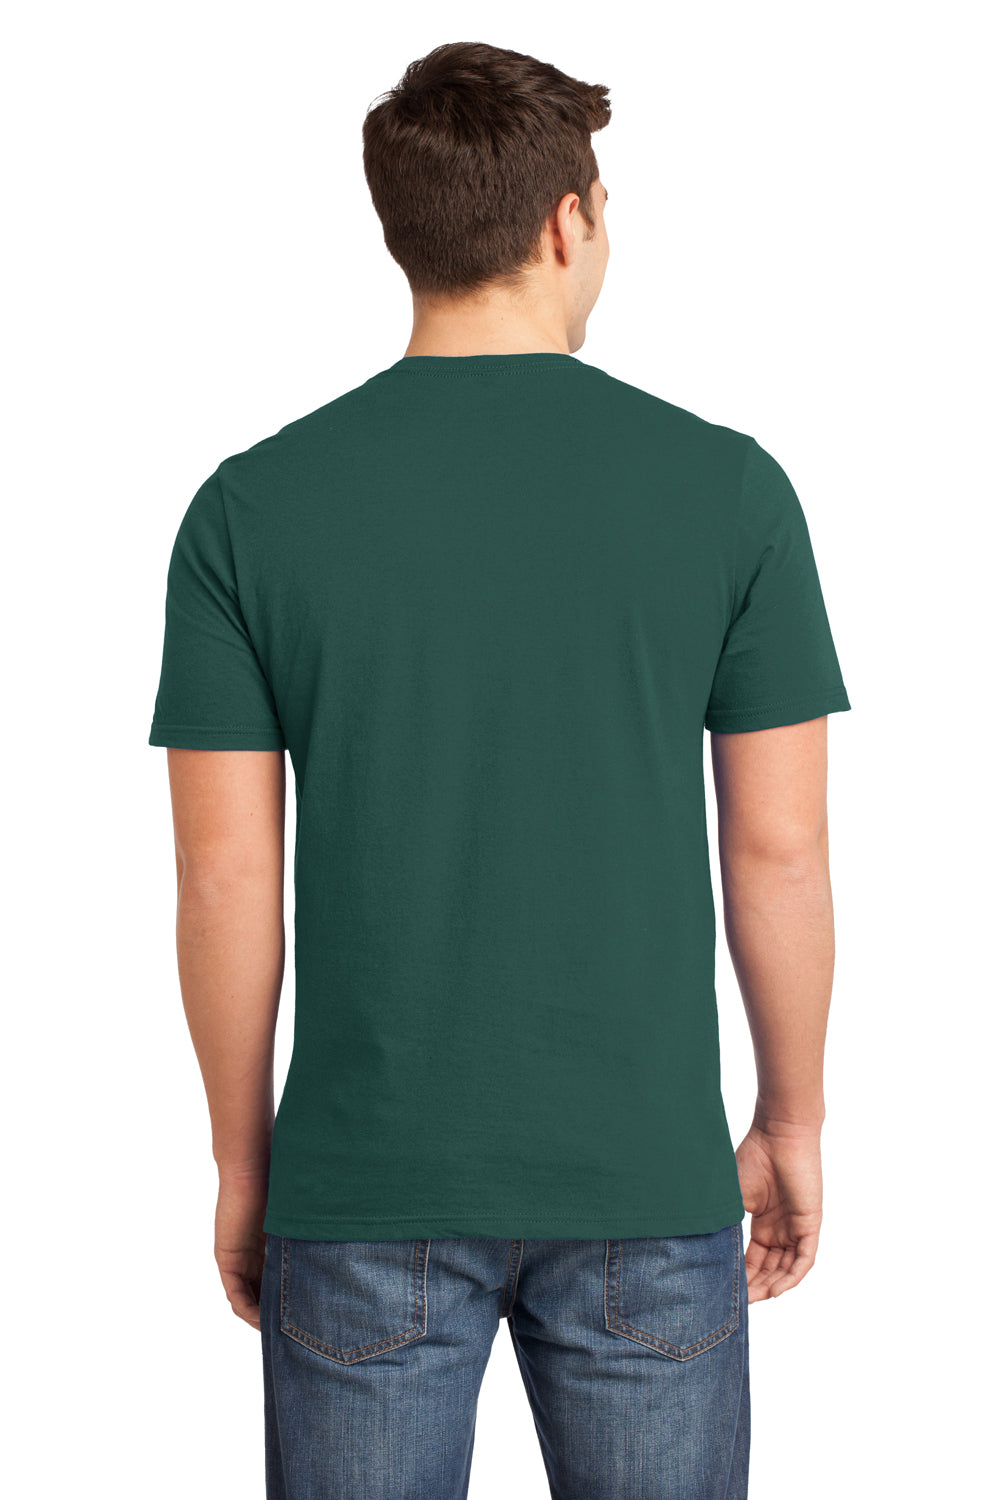 District DT6000 Mens Very Important Short Sleeve Crewneck T-Shirt Evergreen Back